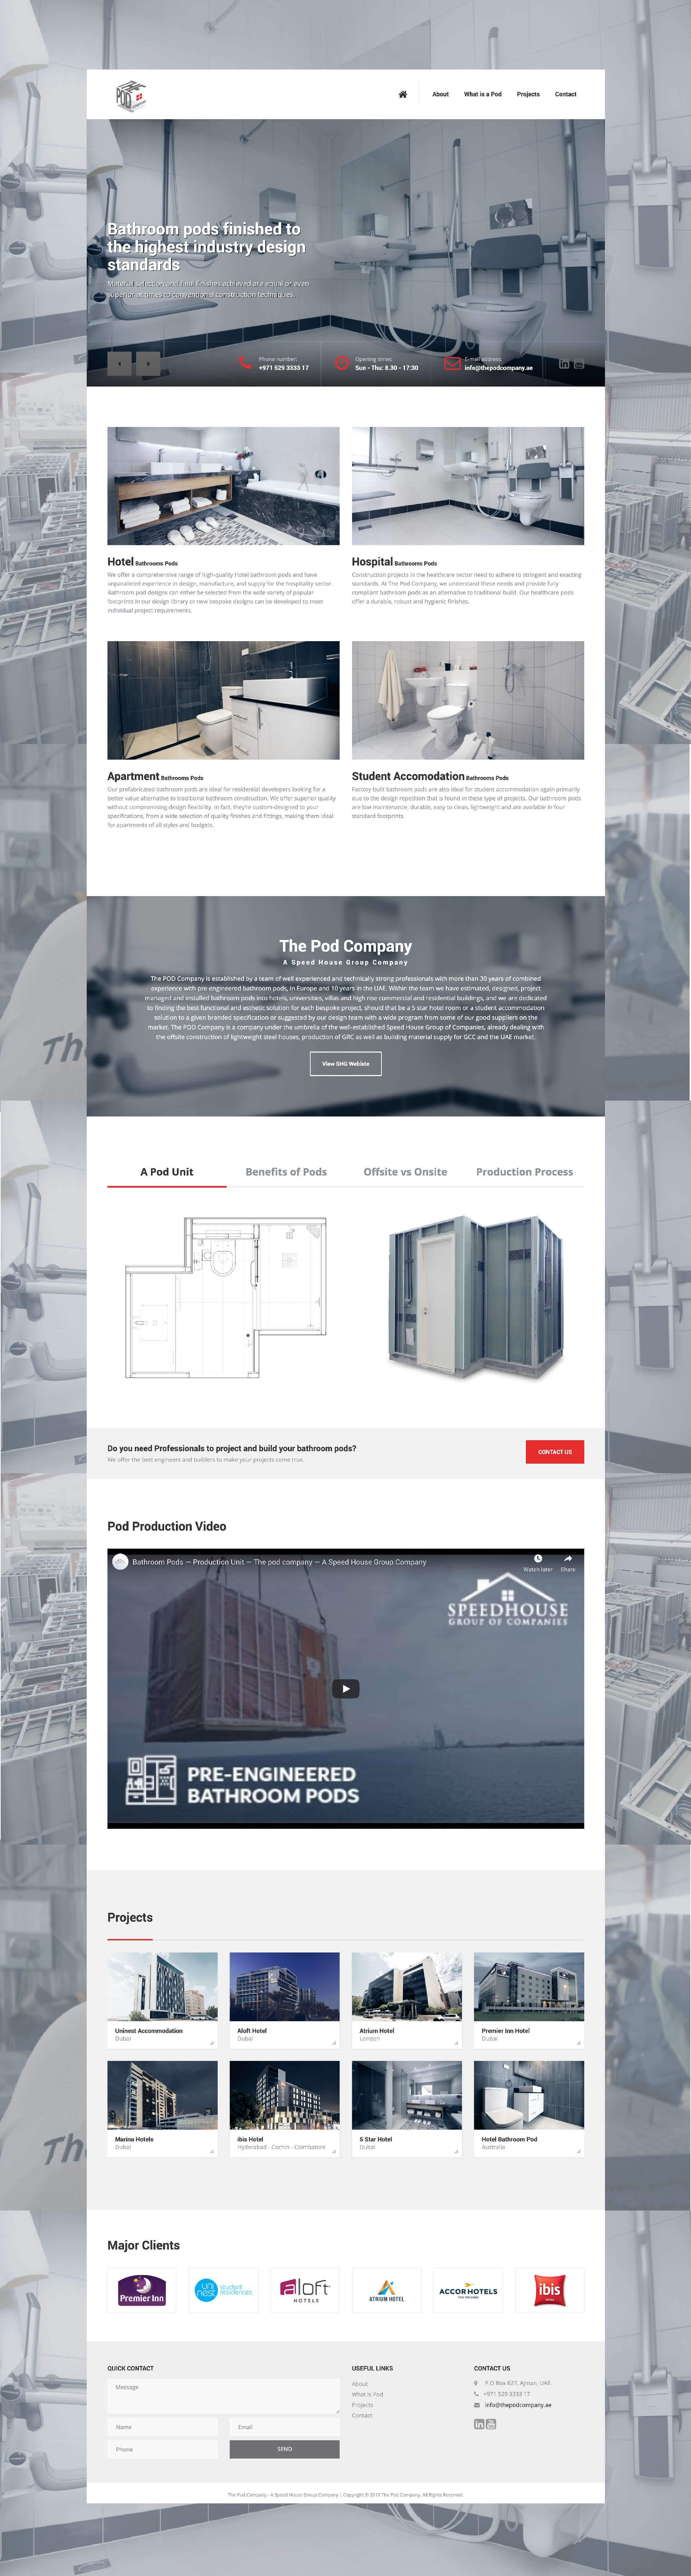 The Pod Company website by freelance Web designer Sajid Sulaiman